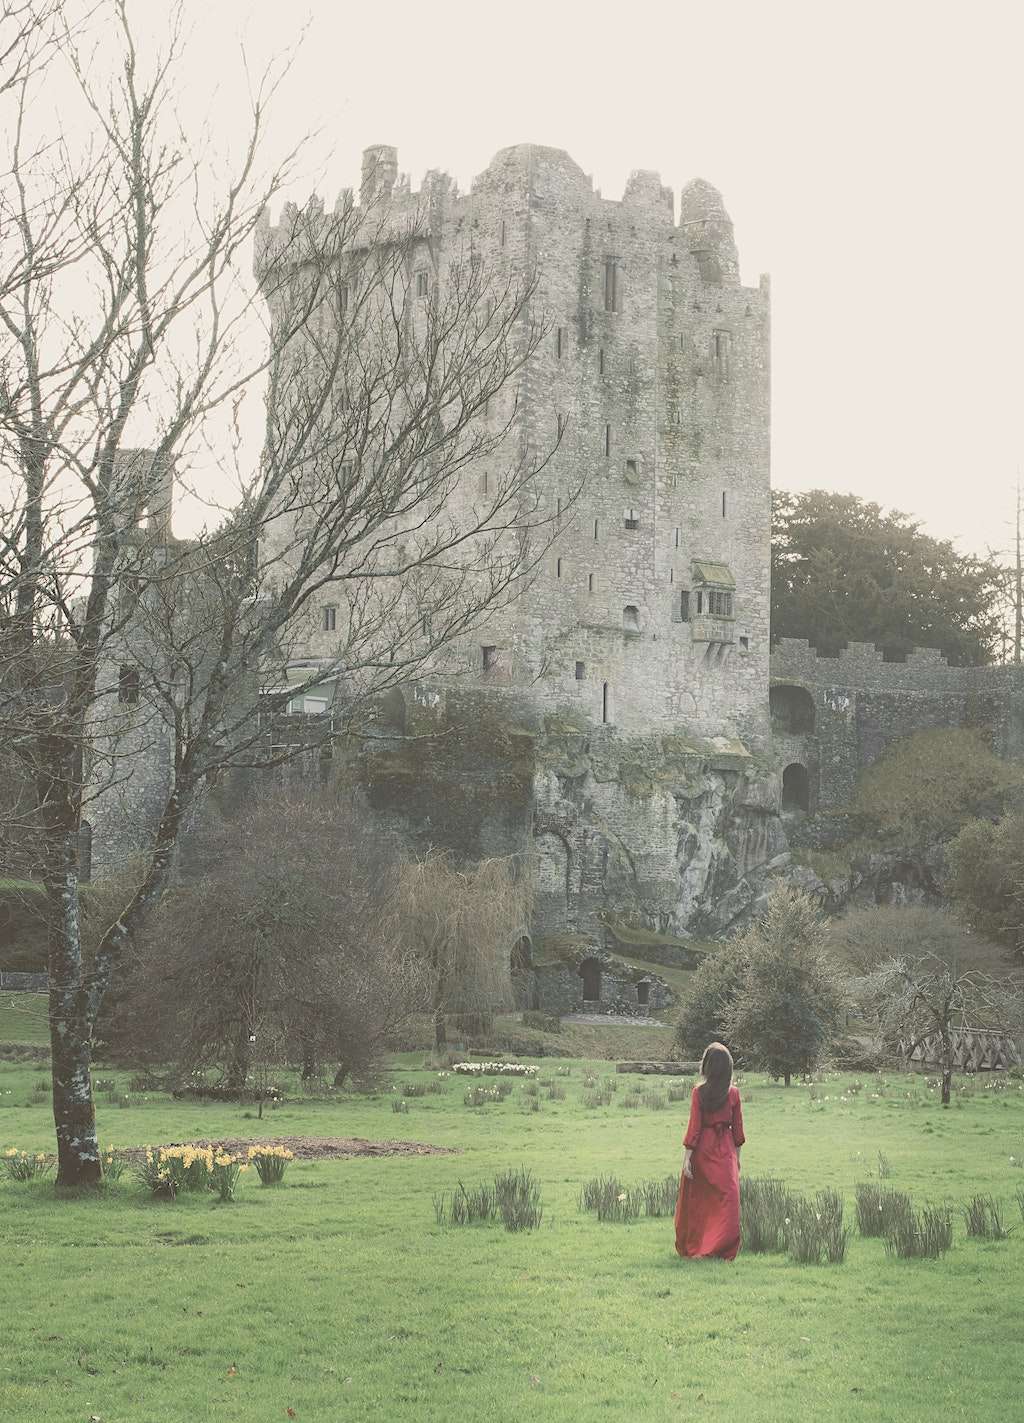 Blarney Castle in Cork